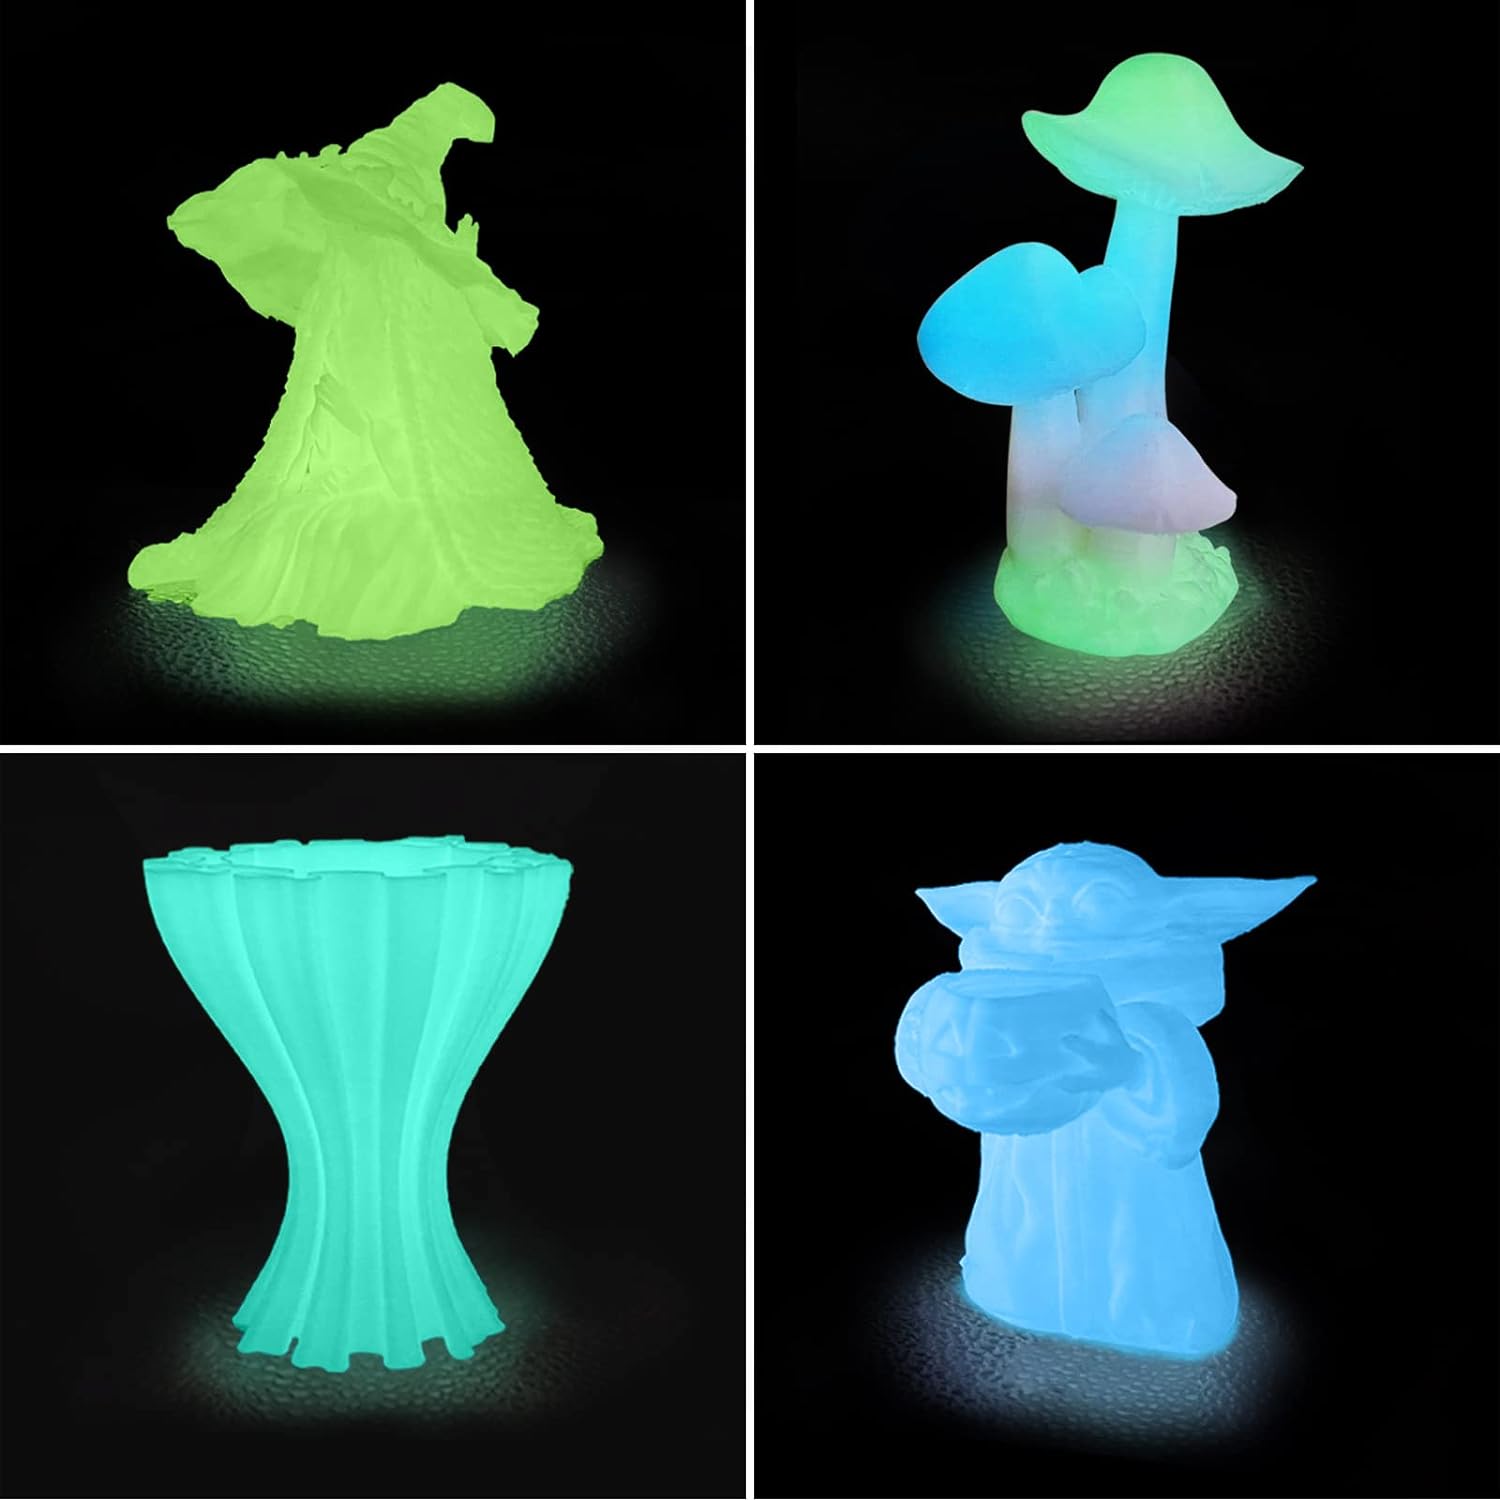 3d-printer-filament-bundle-glow-in-the-dark-filament-multicolor-green-blue-and-blue-green-pla-filament-175-mm-dimensiona-1 3D Printer Filament Bundle Review